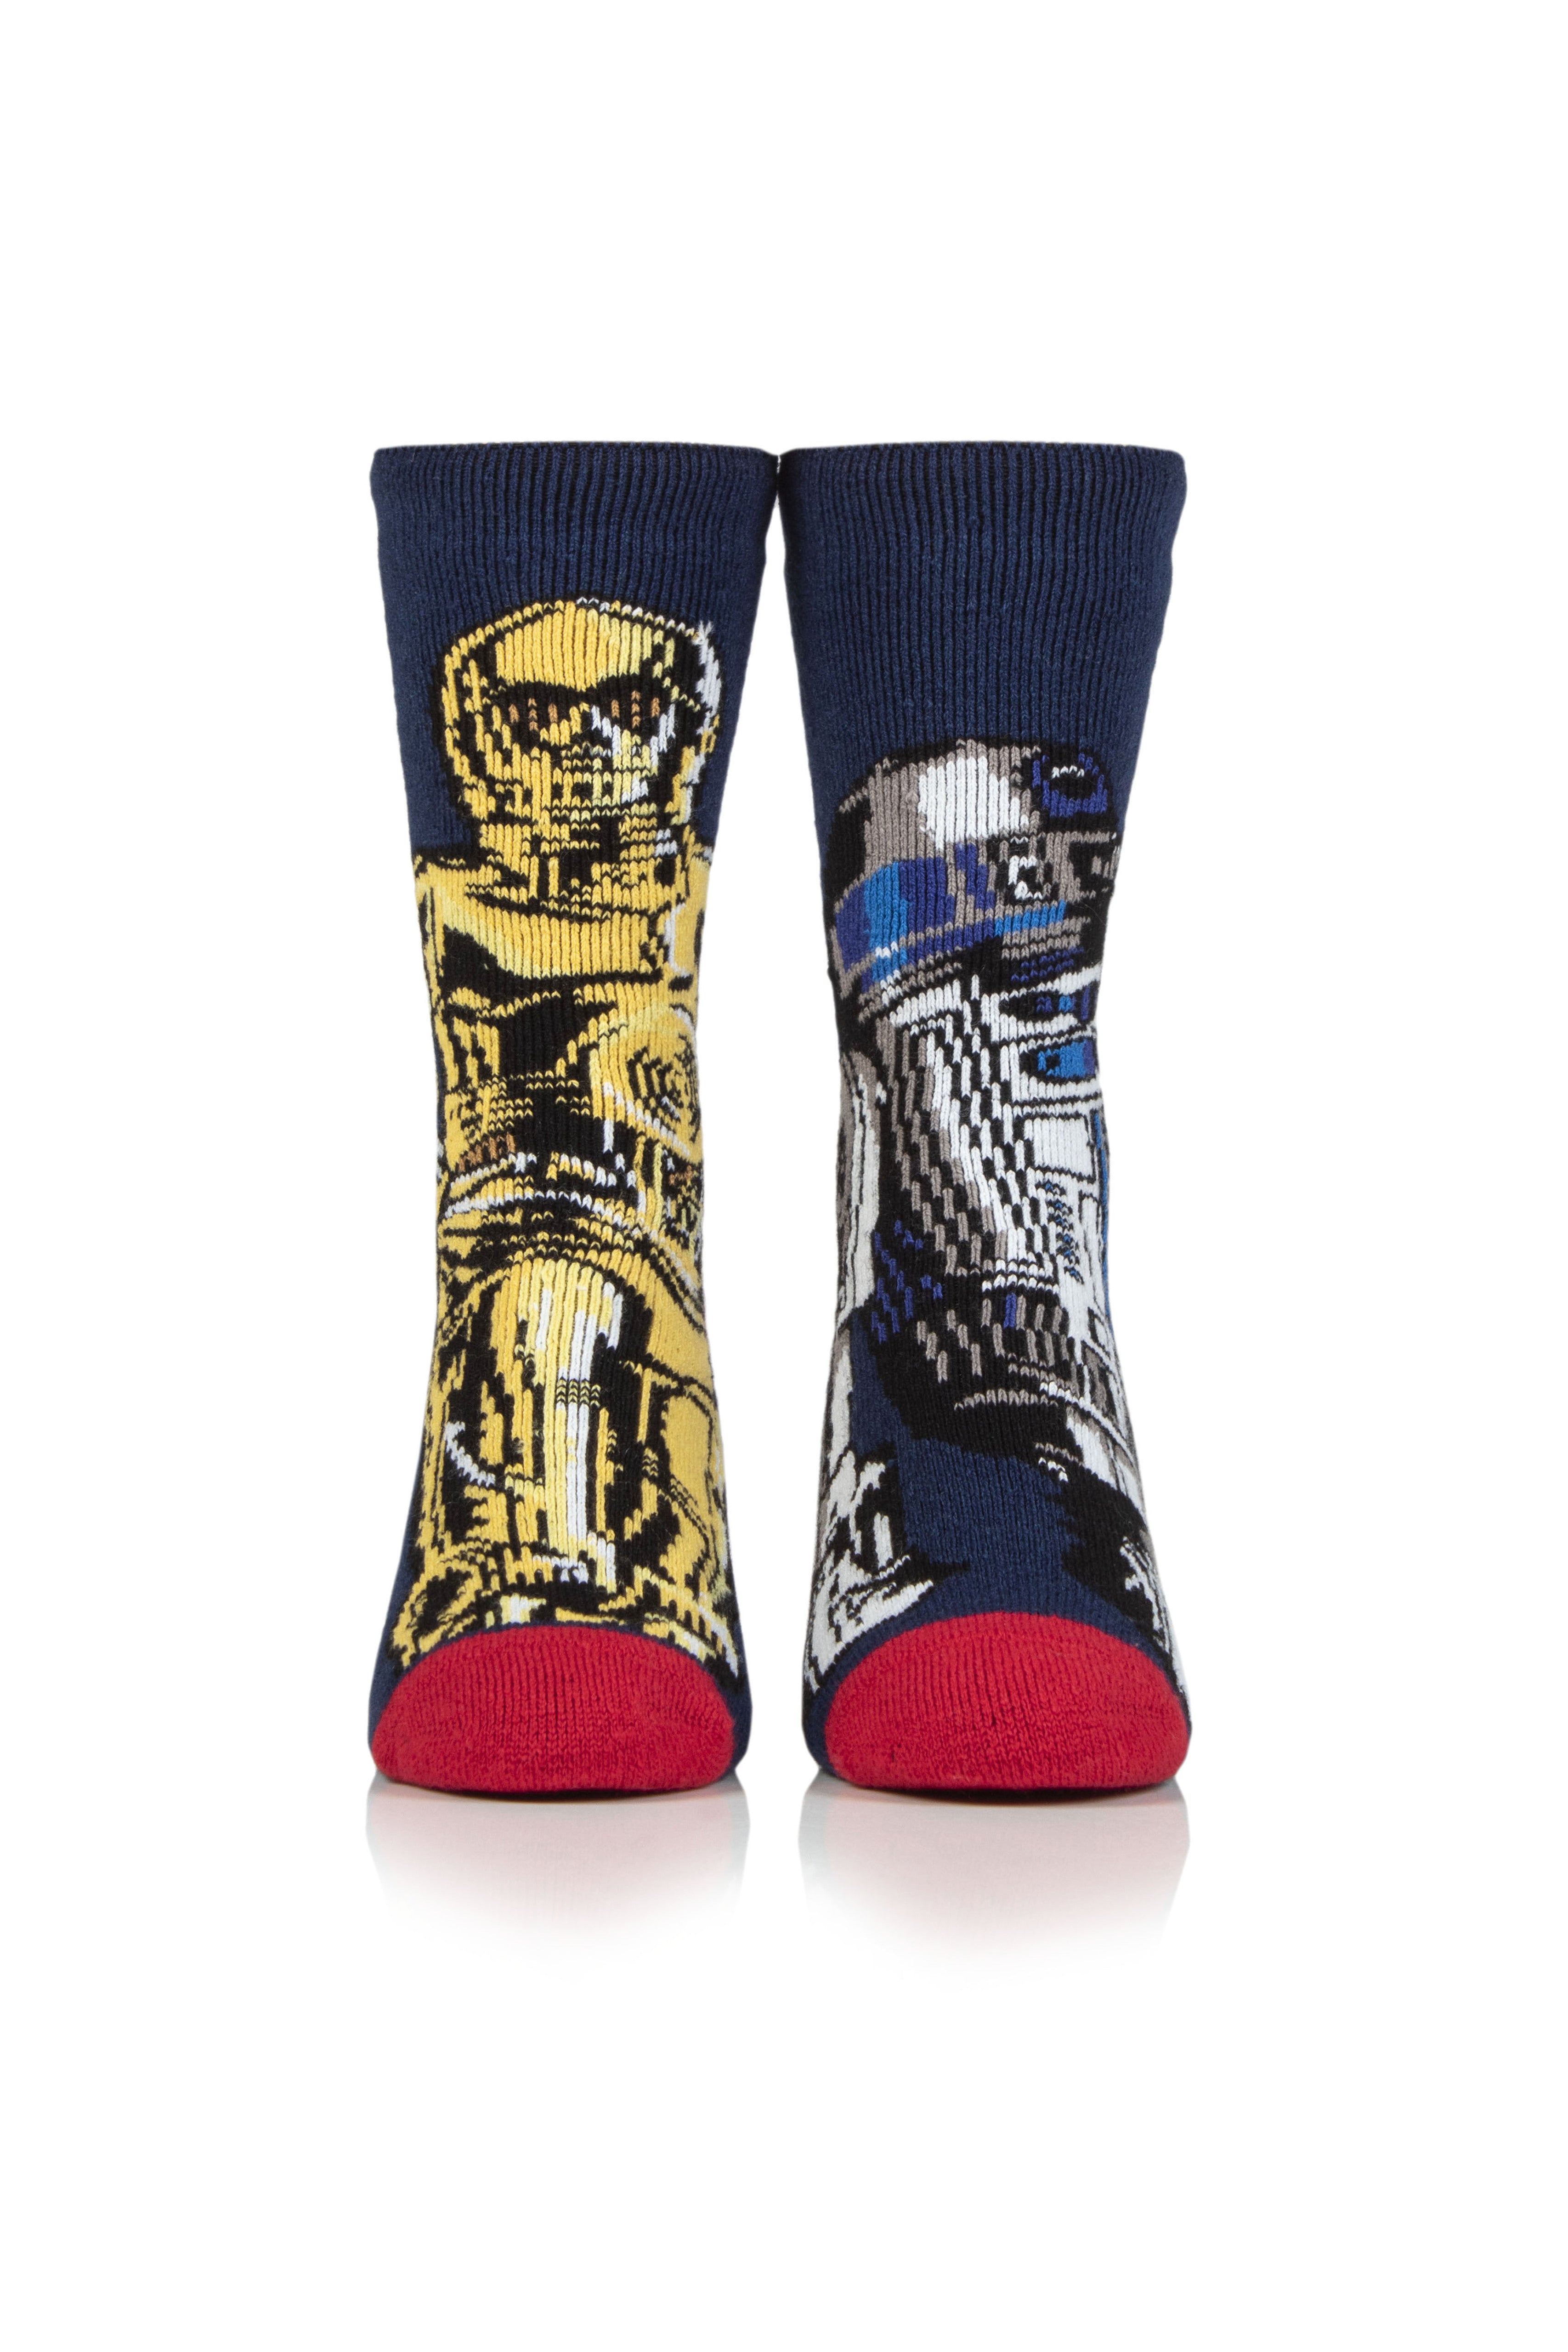 HEAT HOLDERS Lite Licensed Star Wars Character Socks-R2D2 and C3PO-Mens 6-11